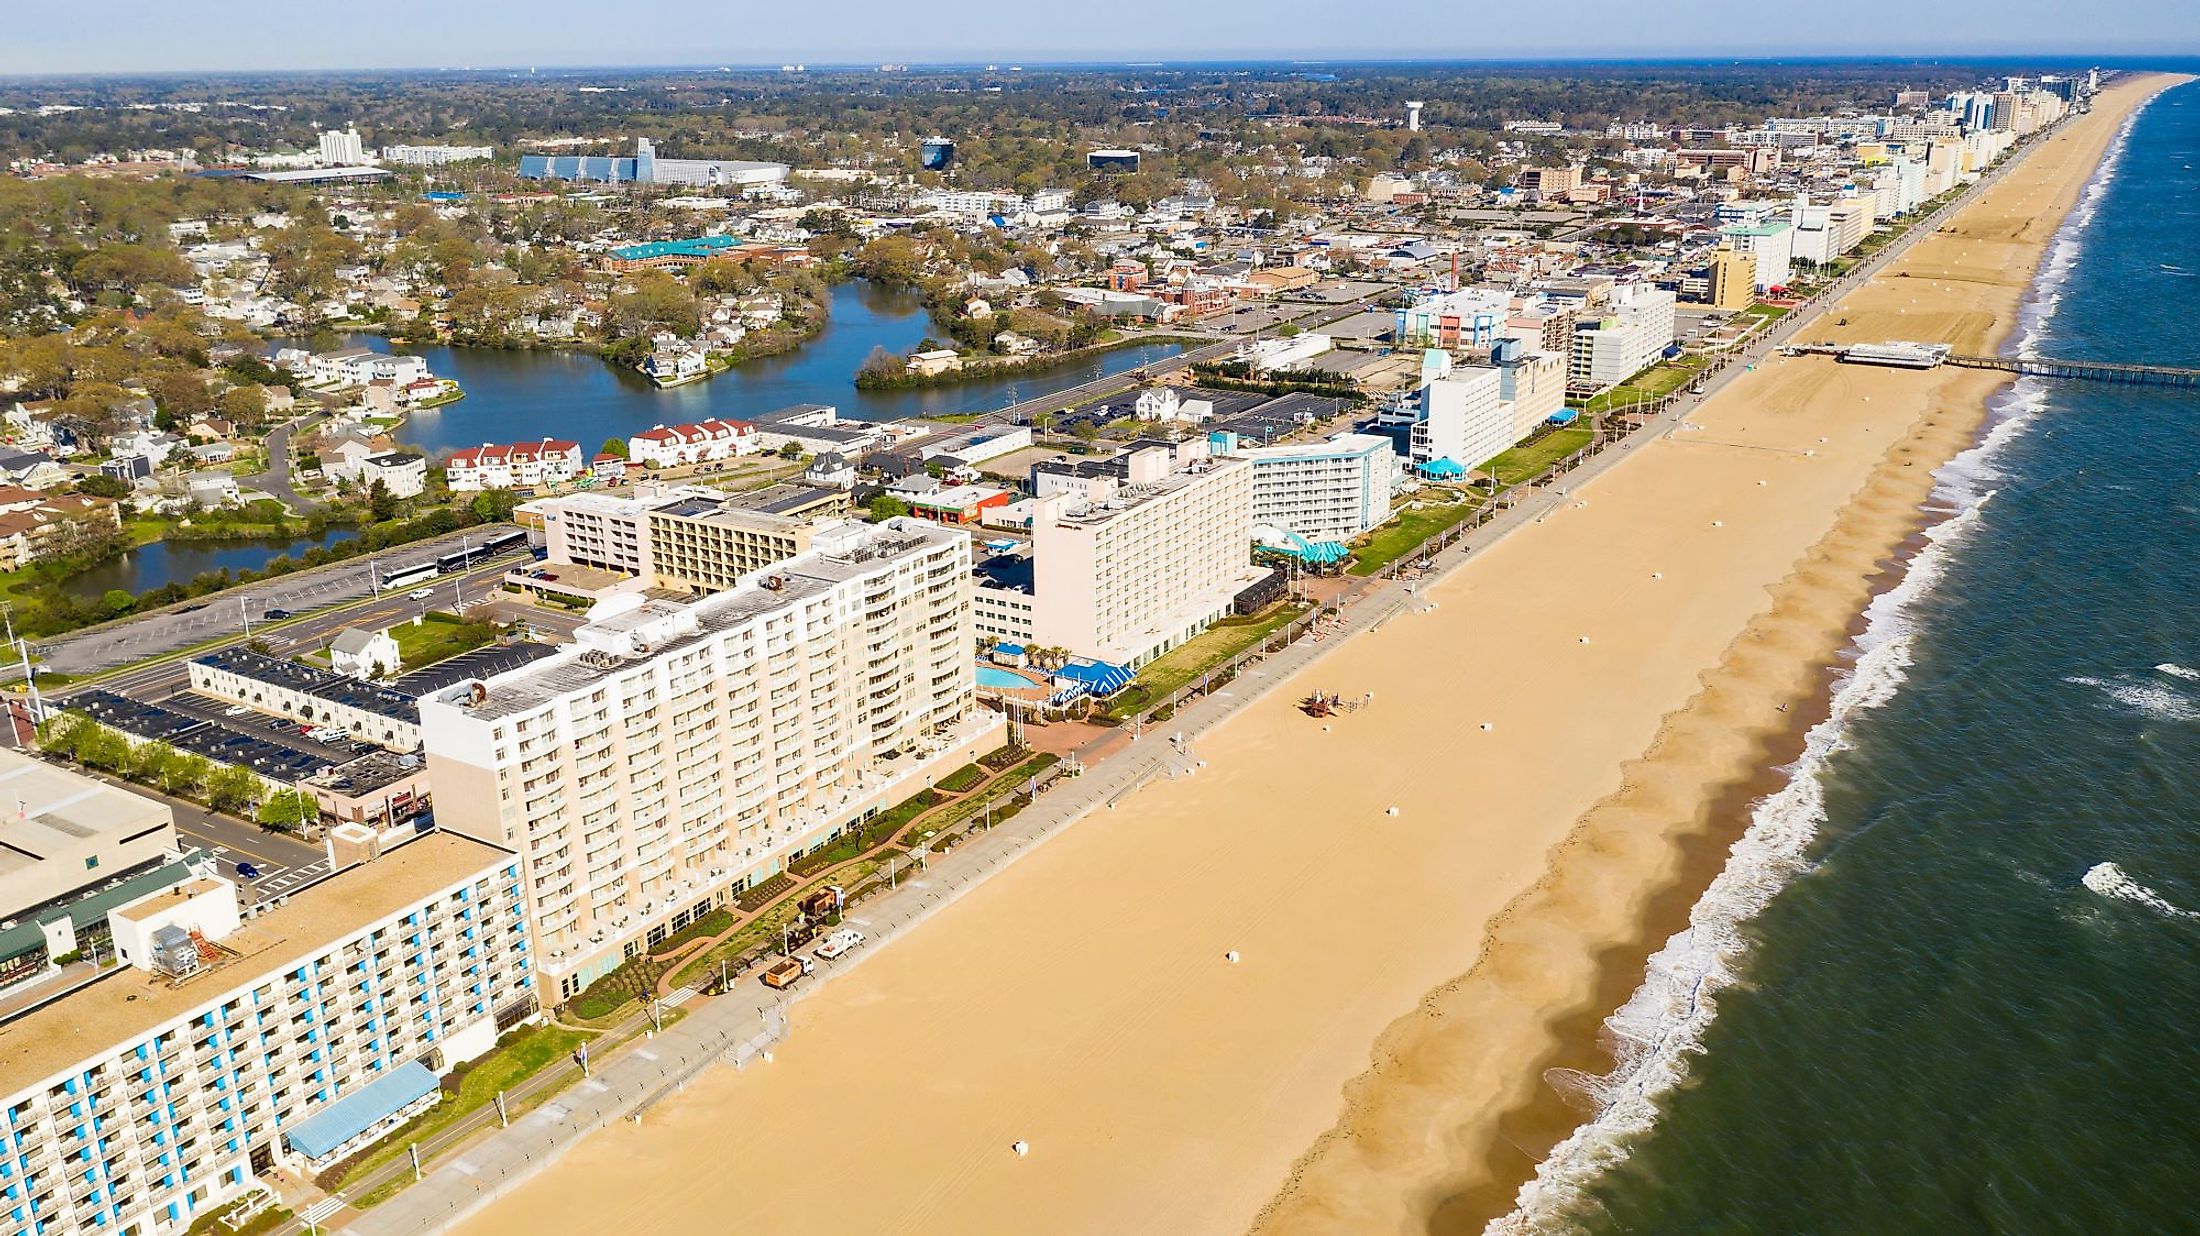 Aerial view of a long row of hotels along an Atlantic Ocean beach in Ocean City, Maryland. 